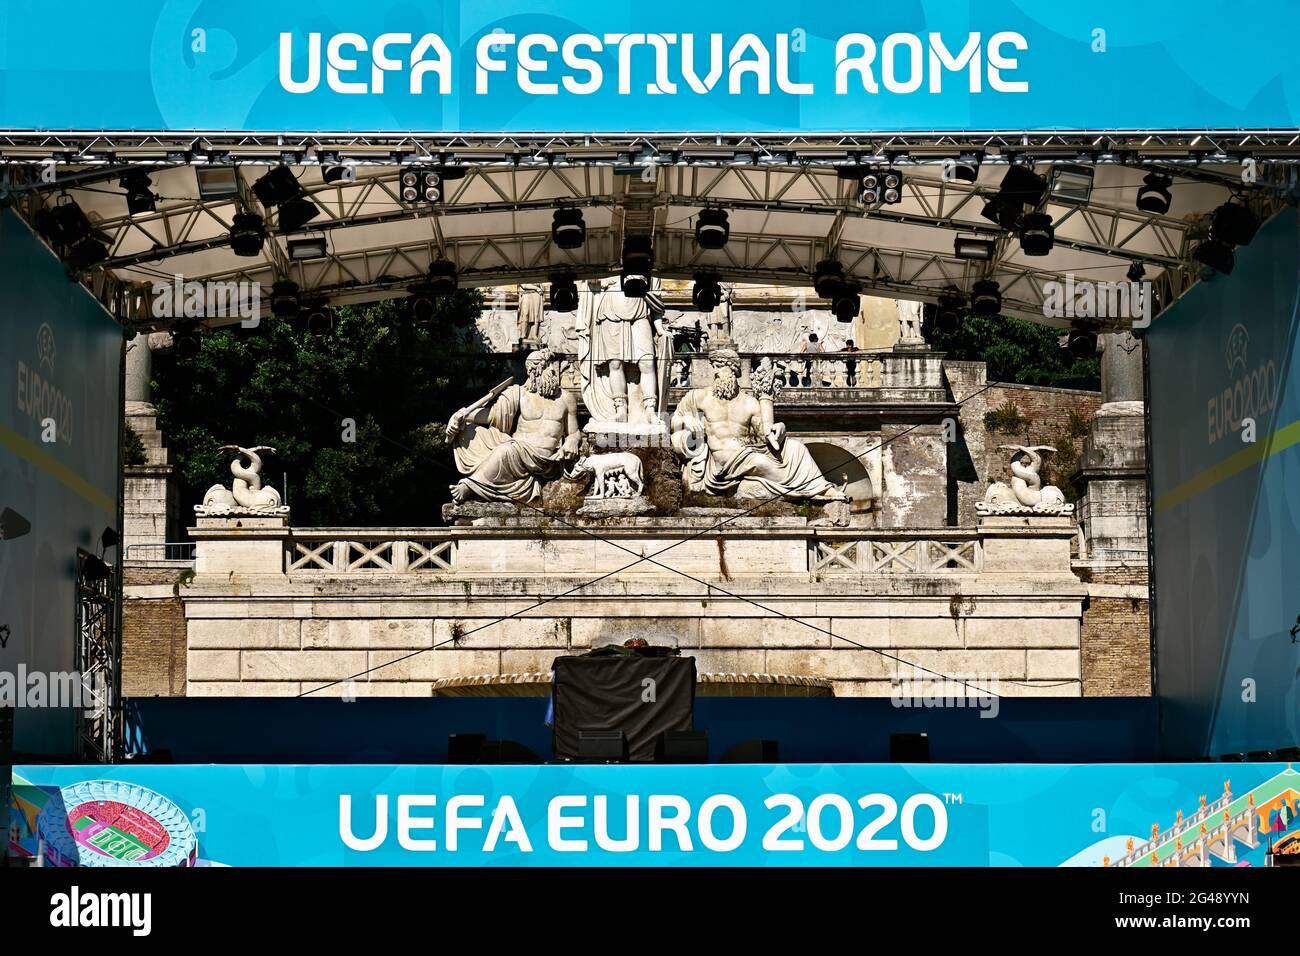 Uefa Champions League Euro 2020, European Football Championships. Fan Zone Football Village in Piazza del Popolo Square. Rome, Italy, Europe. 2021 Stock Photo